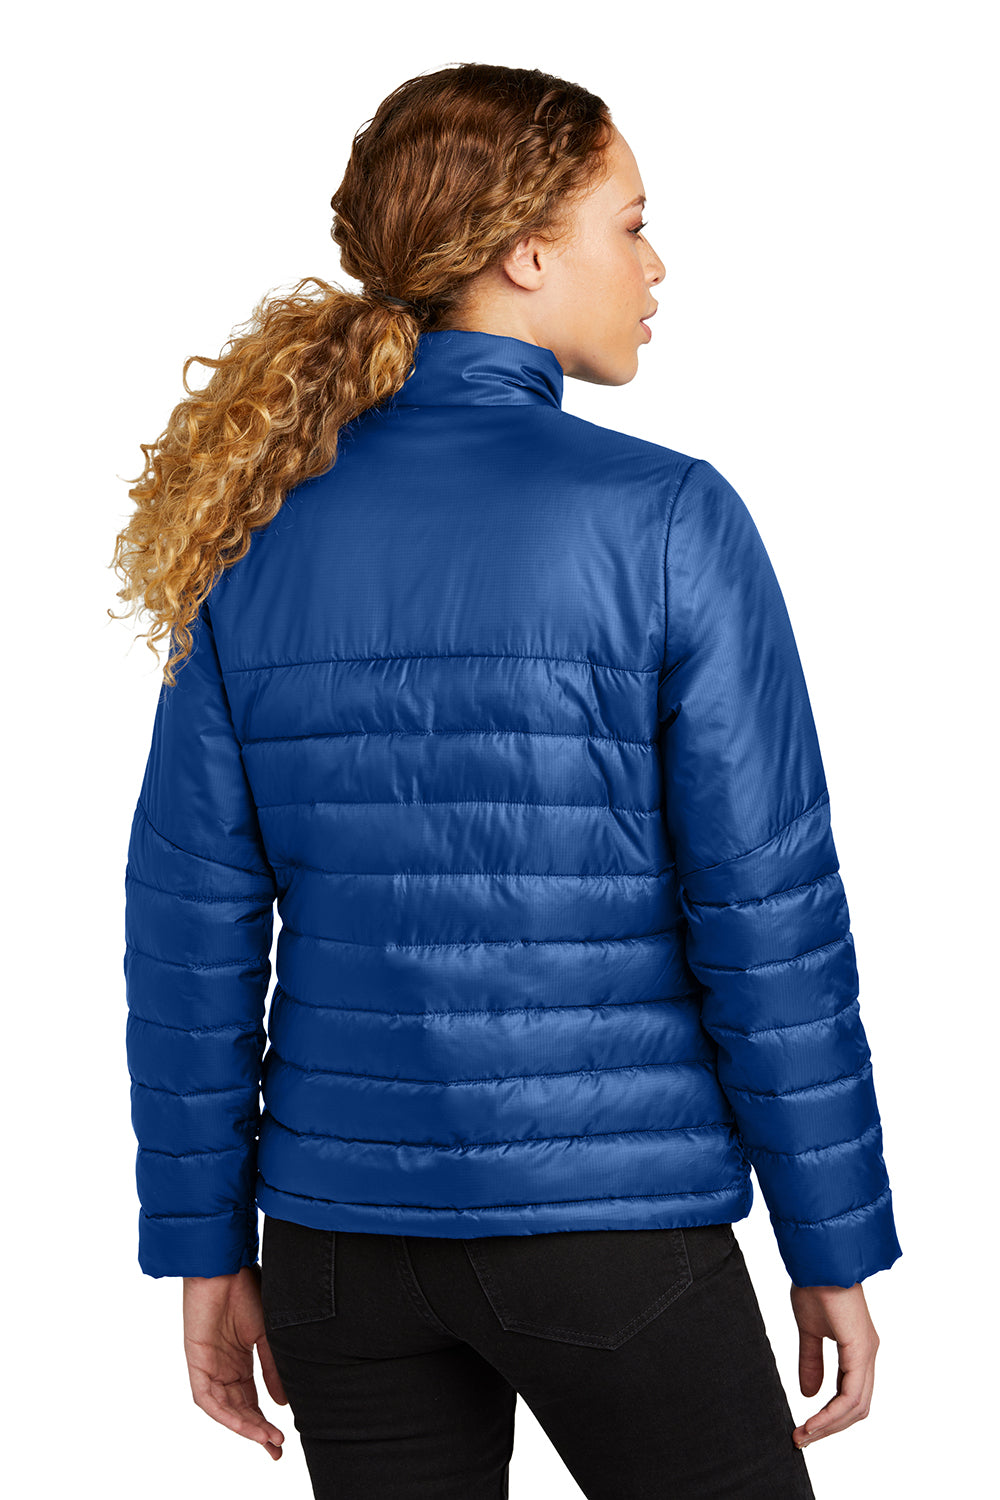 Eddie Bauer EB511 Womens Water Resistant Quilted Full Zip Jacket Cobalt Blue Model Back